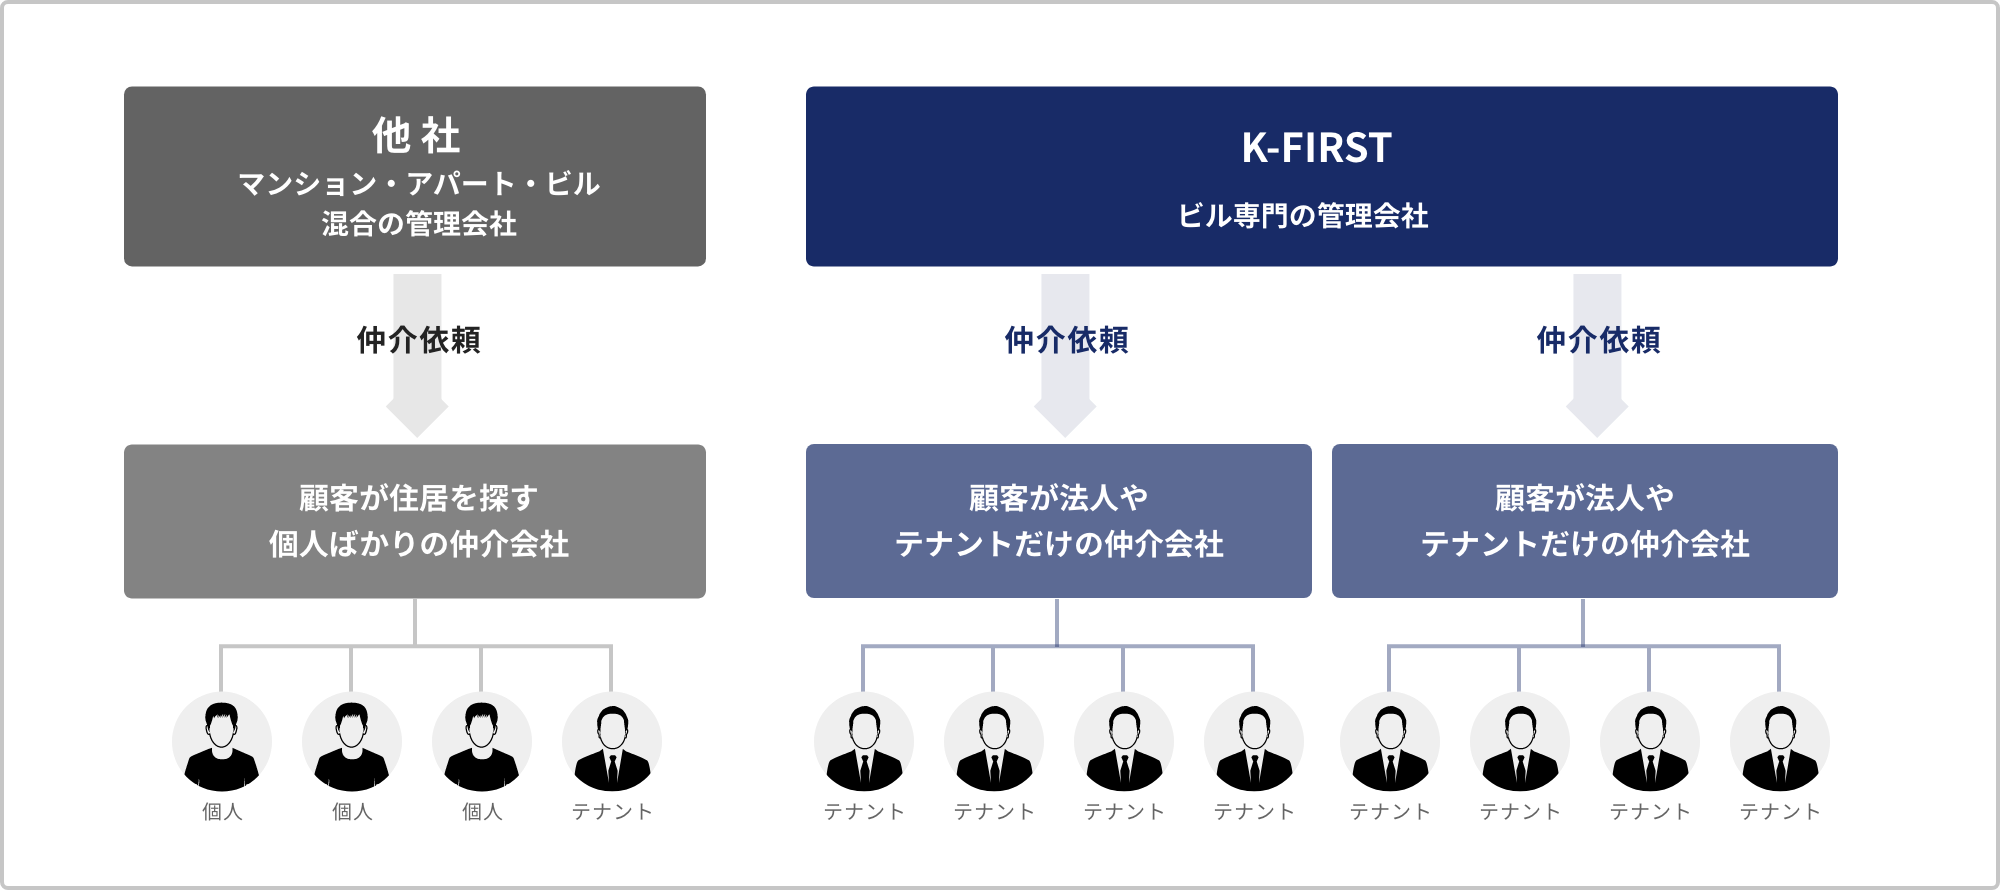 K-FIRSTのリーシングの仕組み